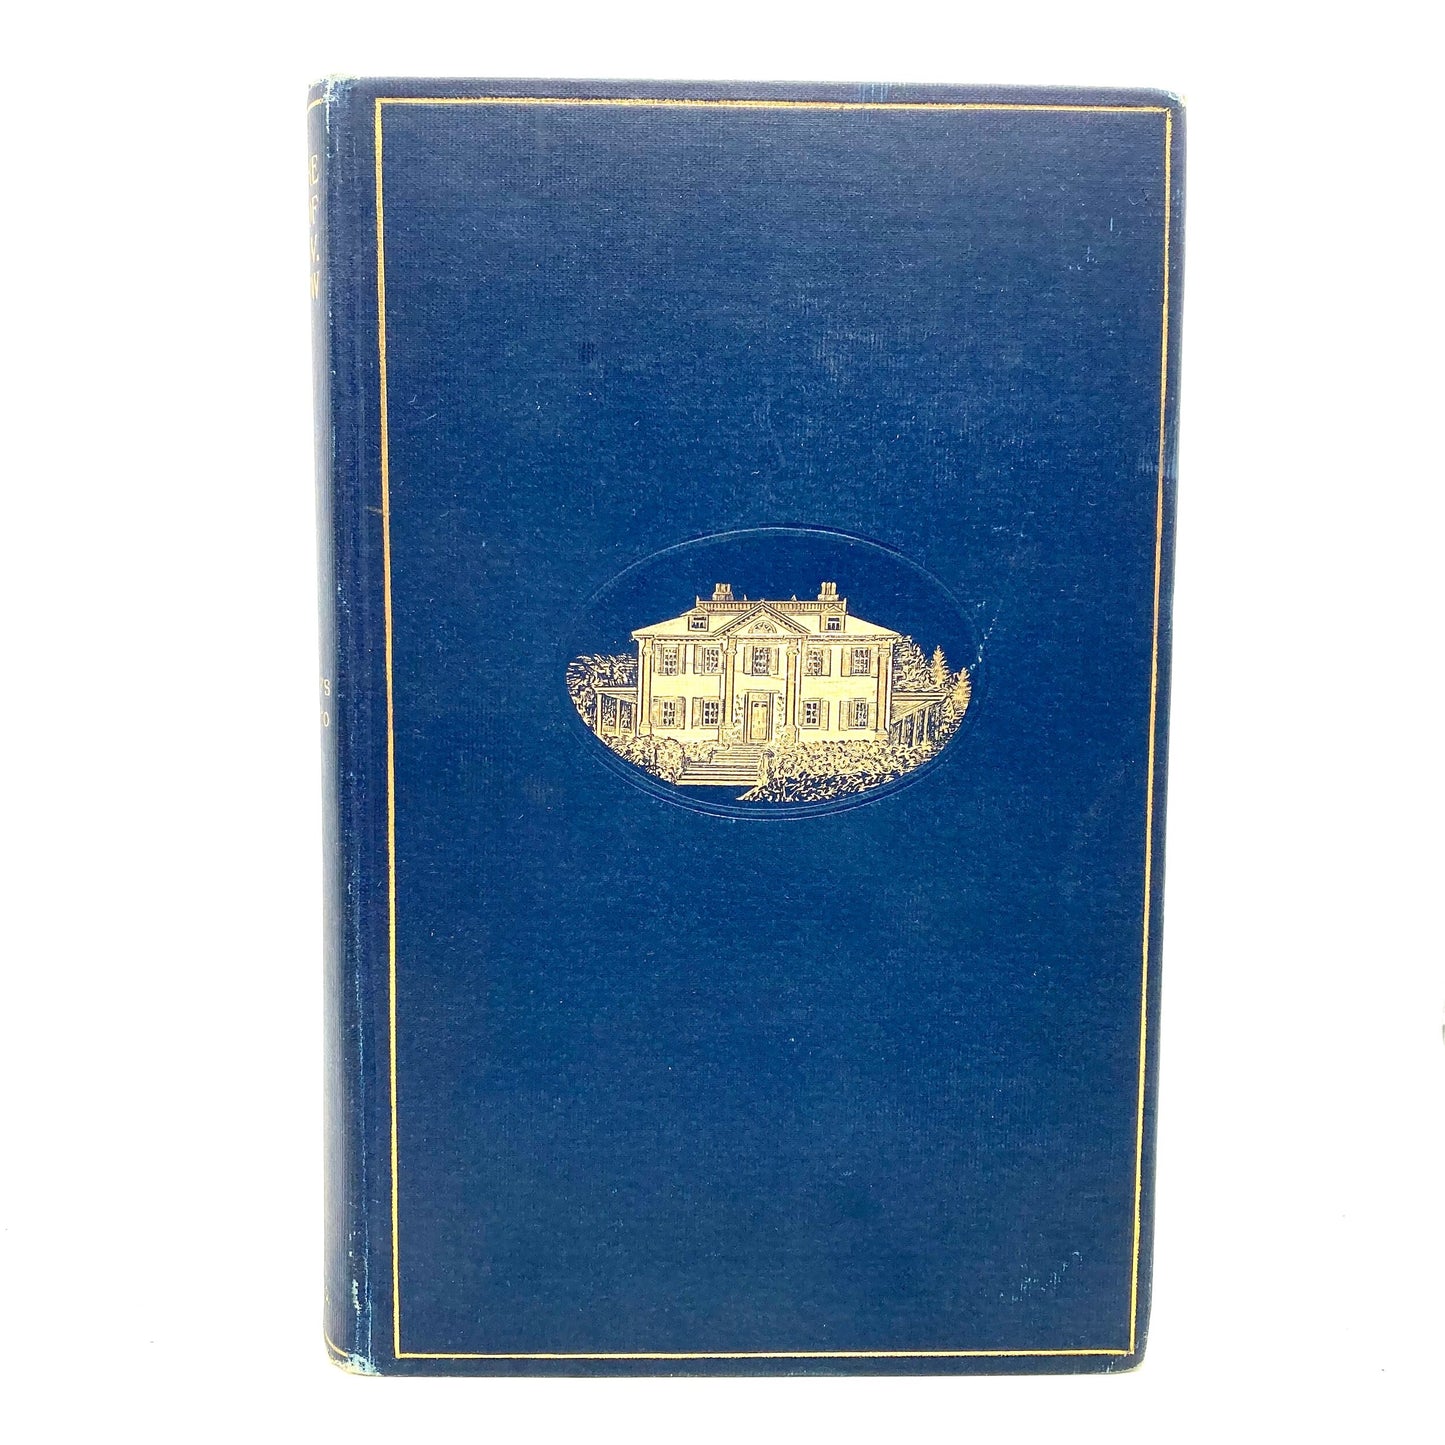 ALIGHIERI, Dante "Purgatory" Translated by Henry Wadsworth Longfellow [Houghton, Mifflin & Co, 1895] - Buzz Bookstore